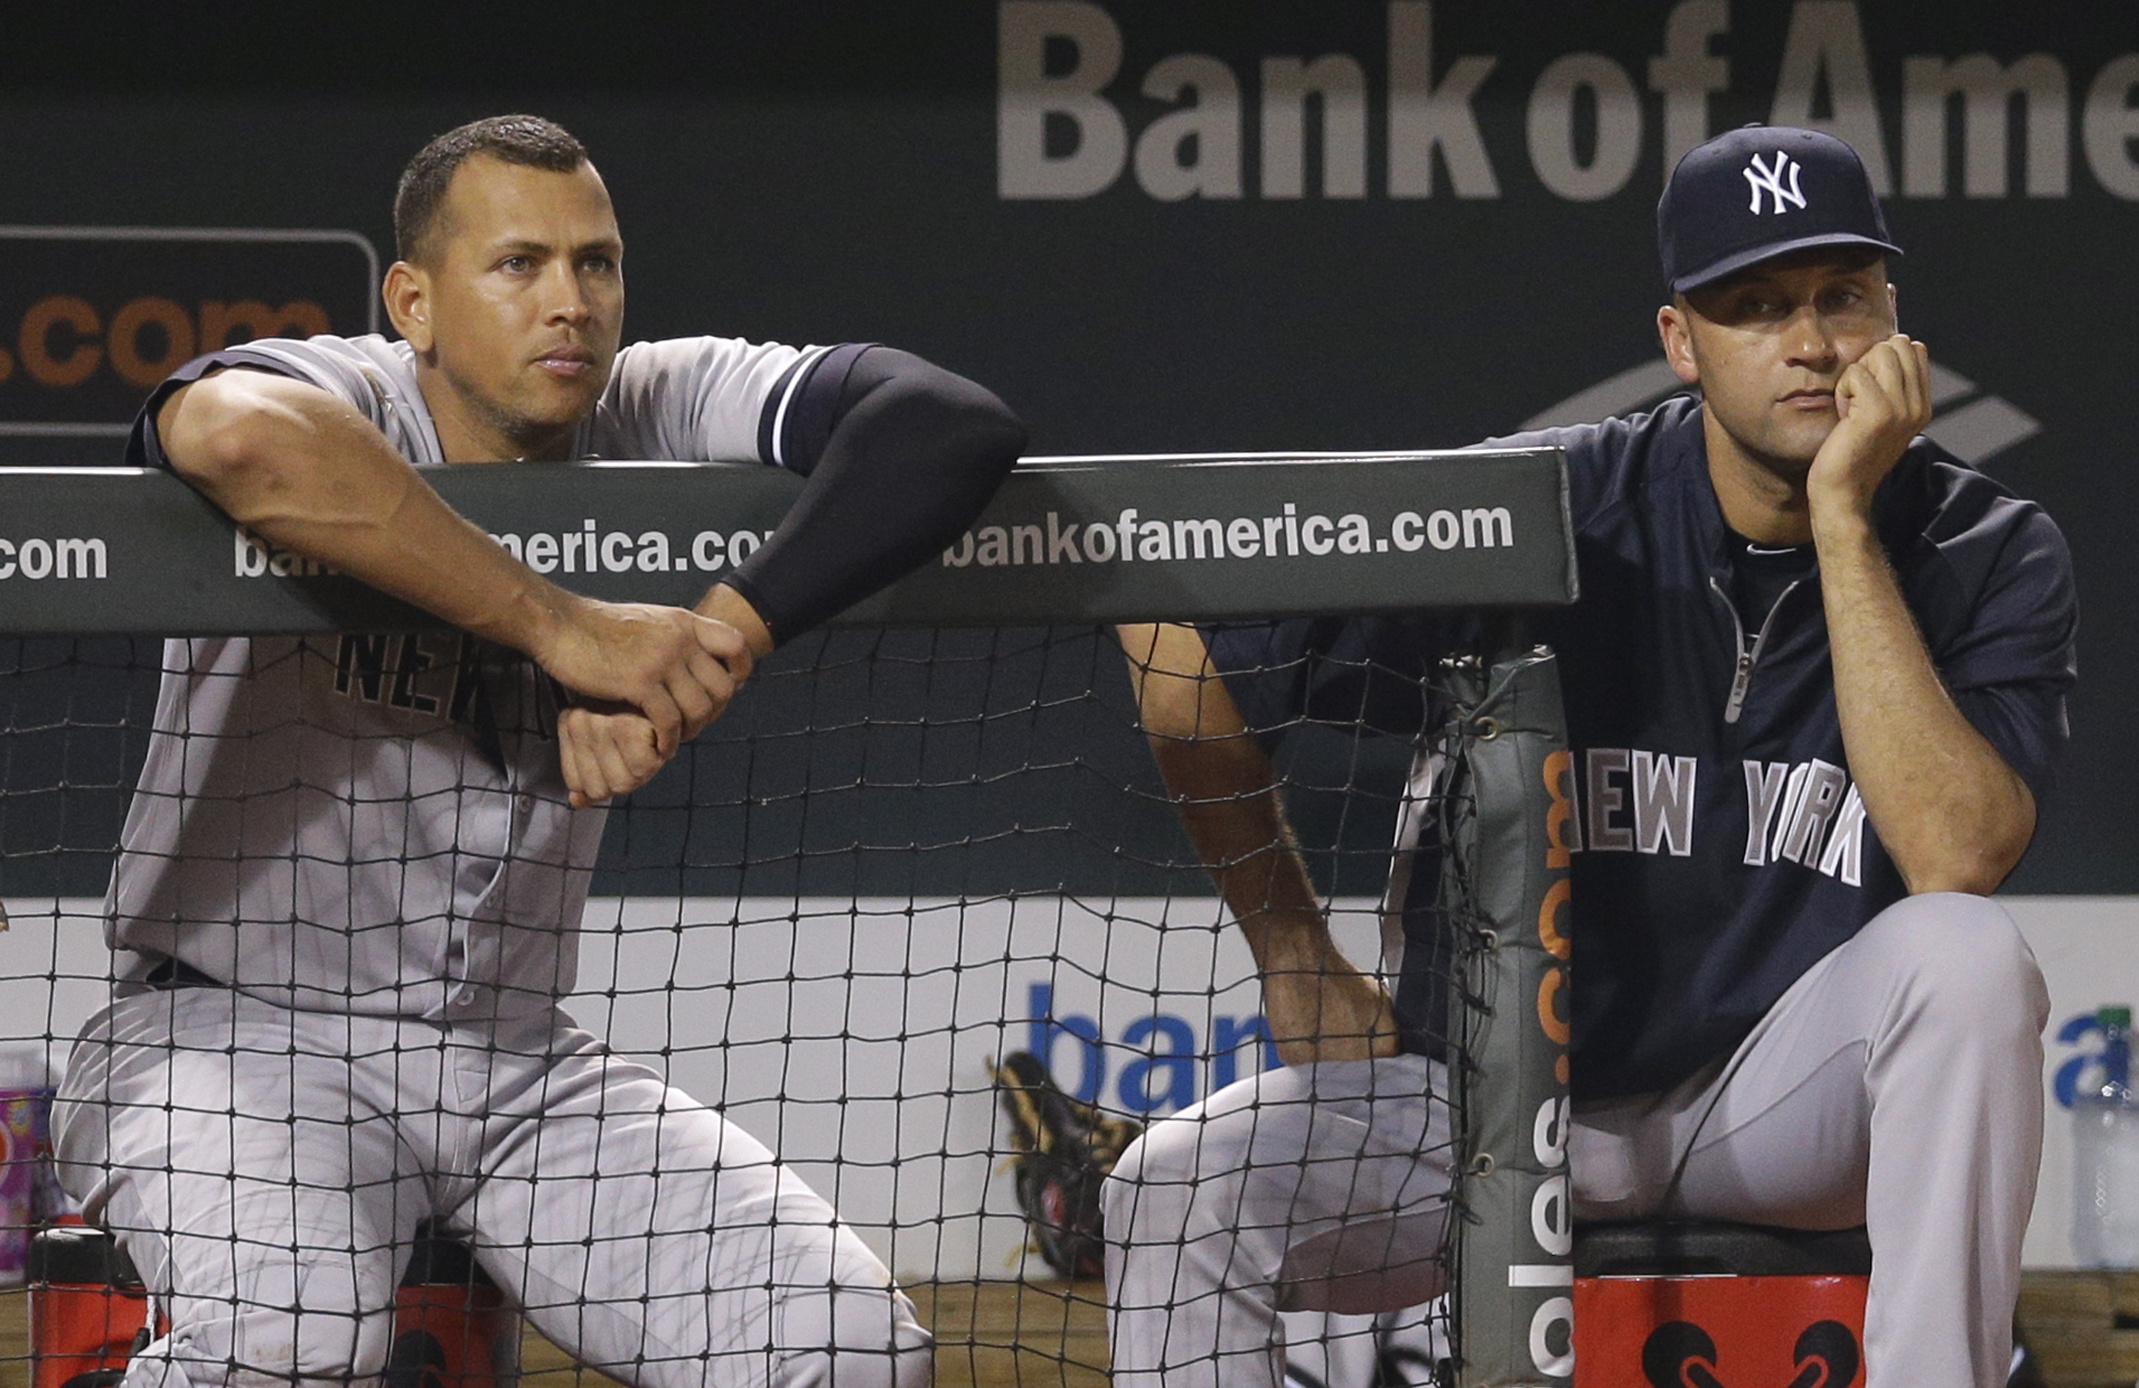 Derek Jeter, Alex Rodriguez to broadcast Yankees-Red Sox game together on ESPN